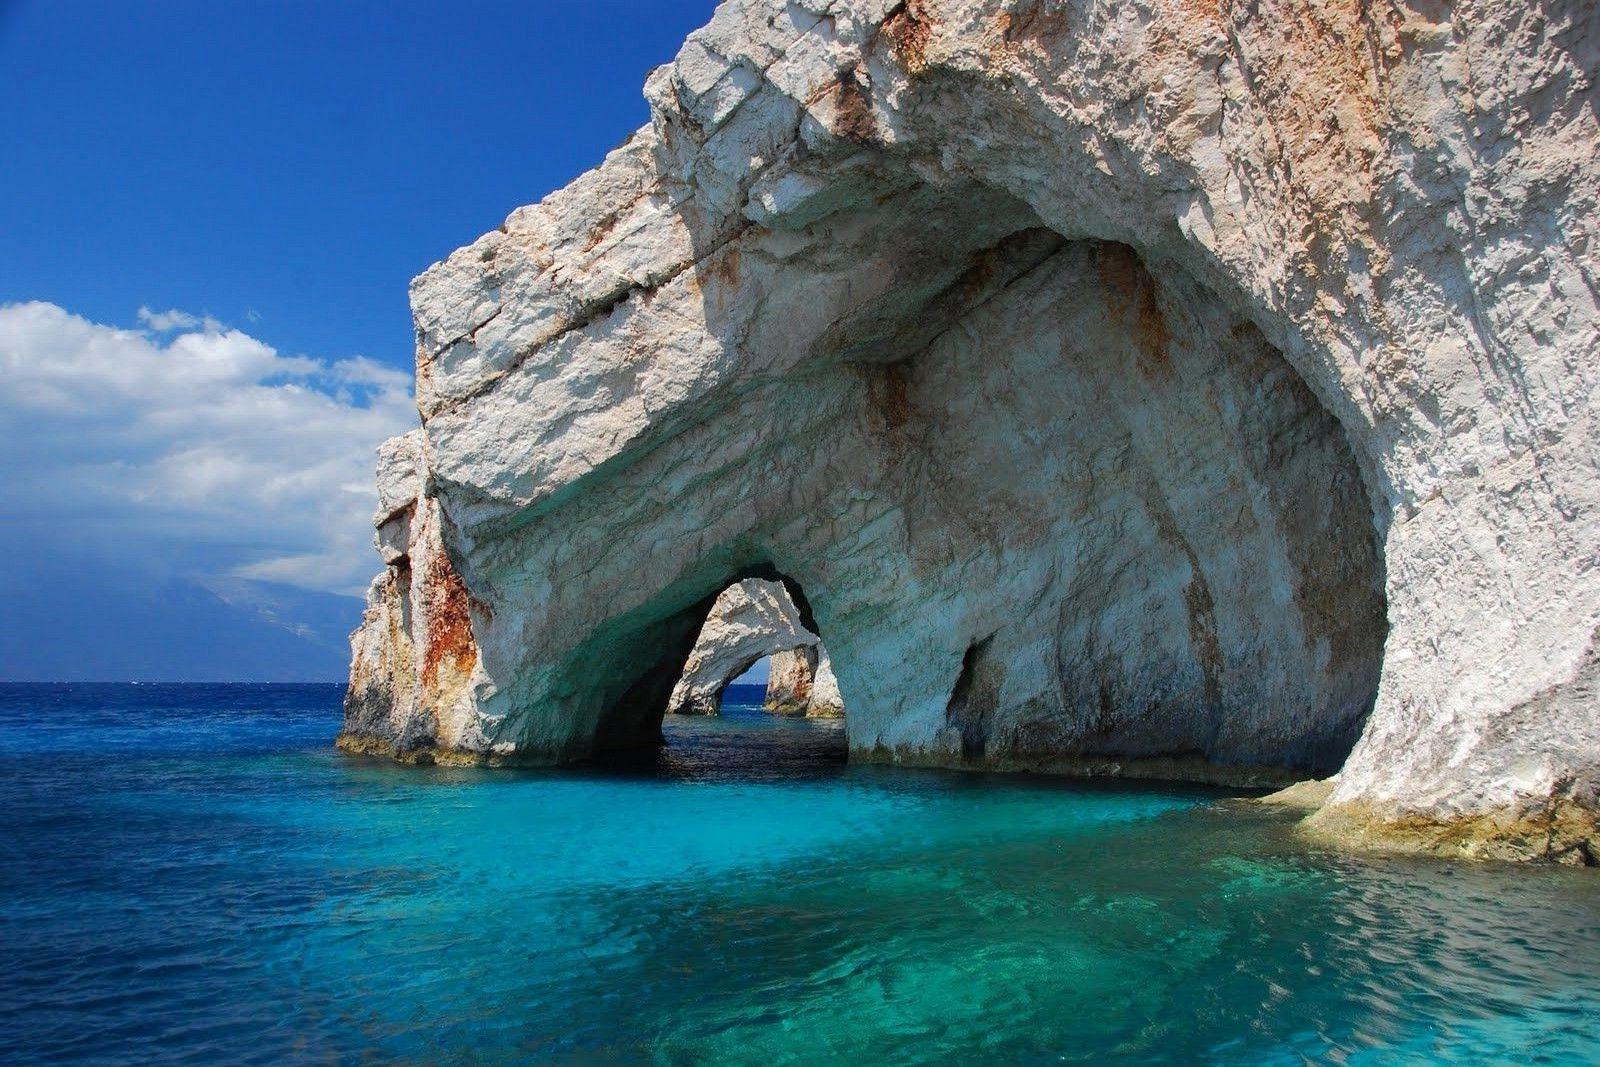 nature, Landscape, Rock, Cave, Sea, Turquoise, Water, Island, Greece